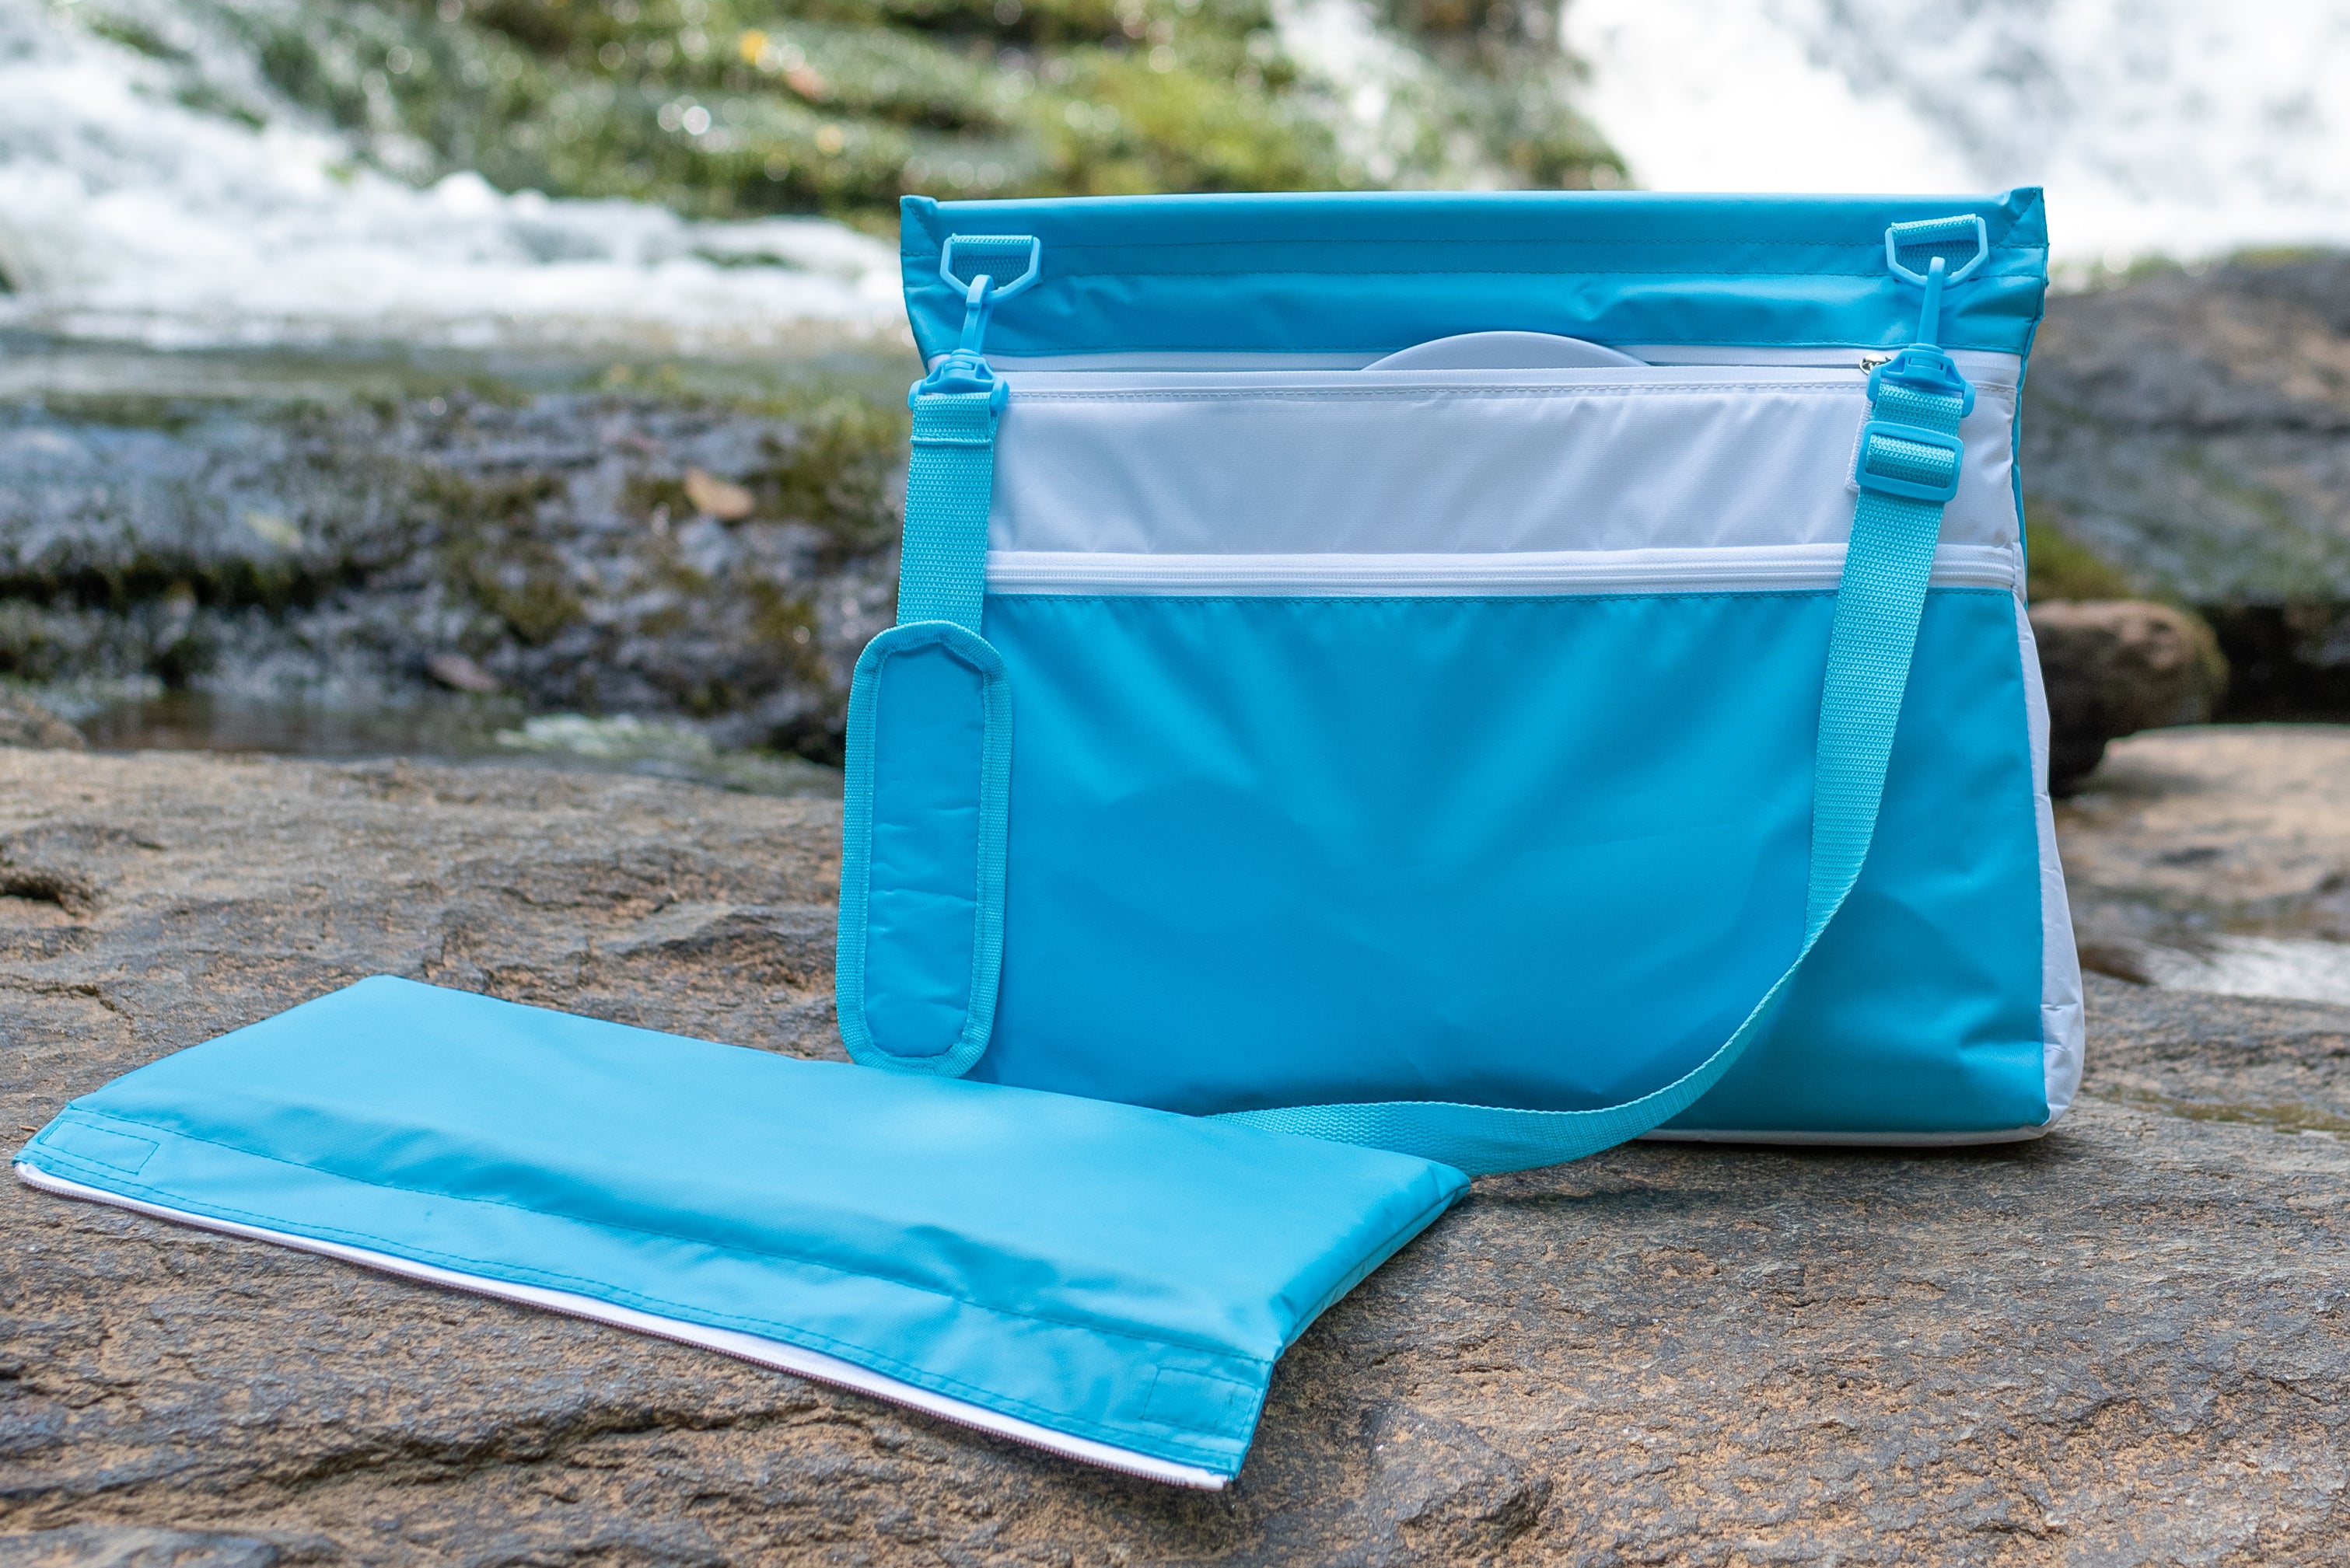 Malibu Beach Gear Personal Cooler Tote Bag